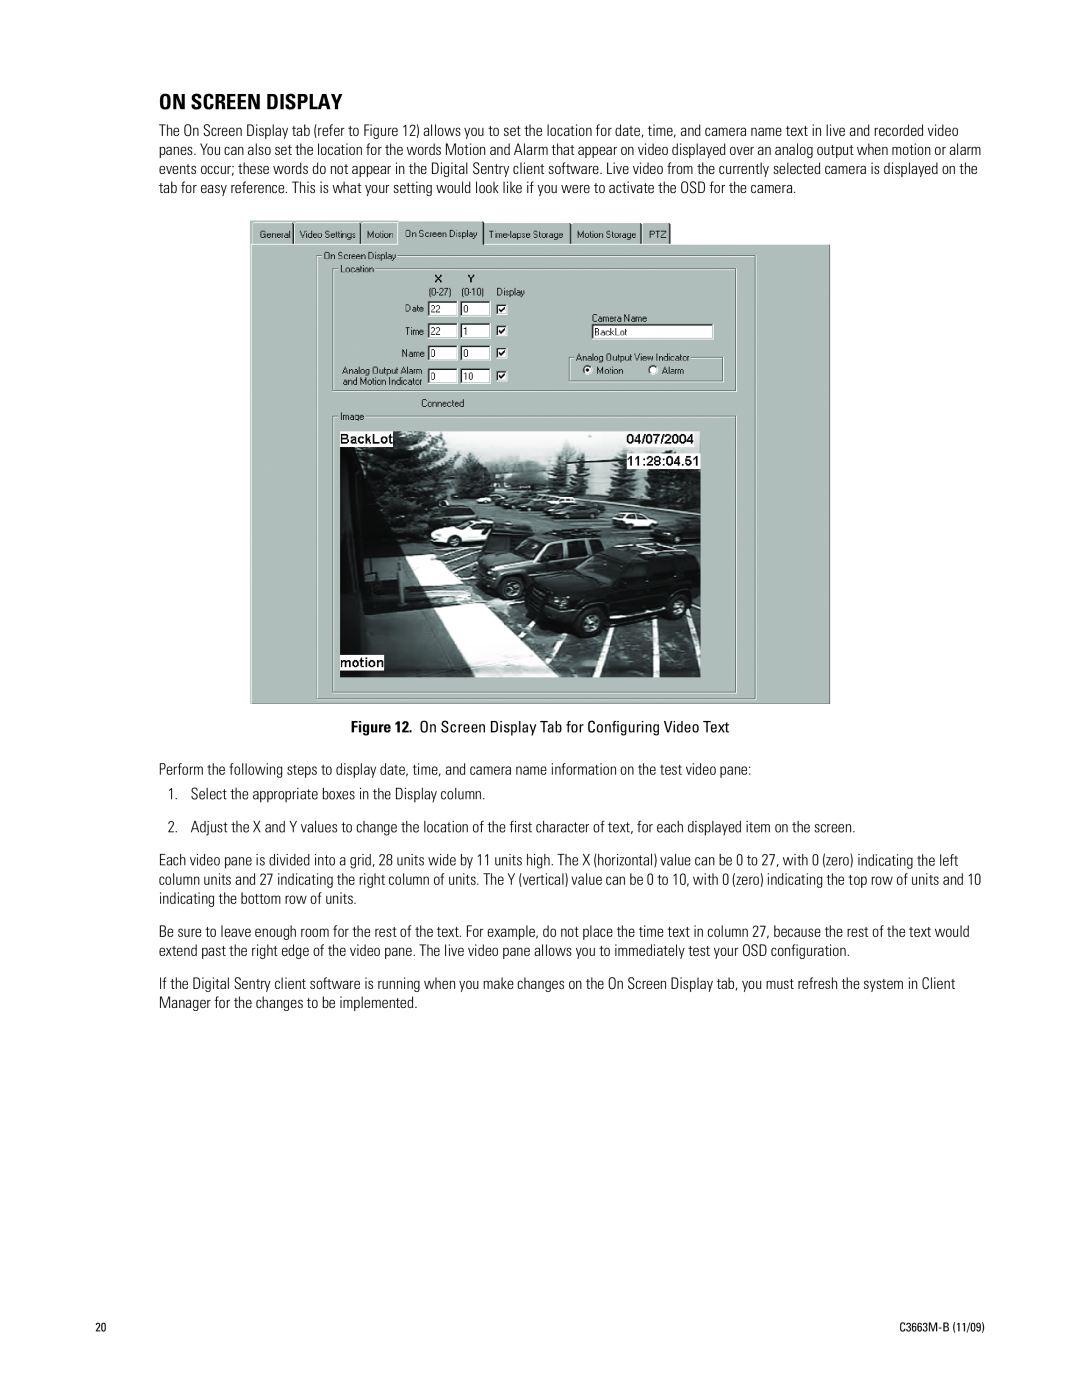 Pelco DS NVS manual On Screen Display, C3663M-B11/09 